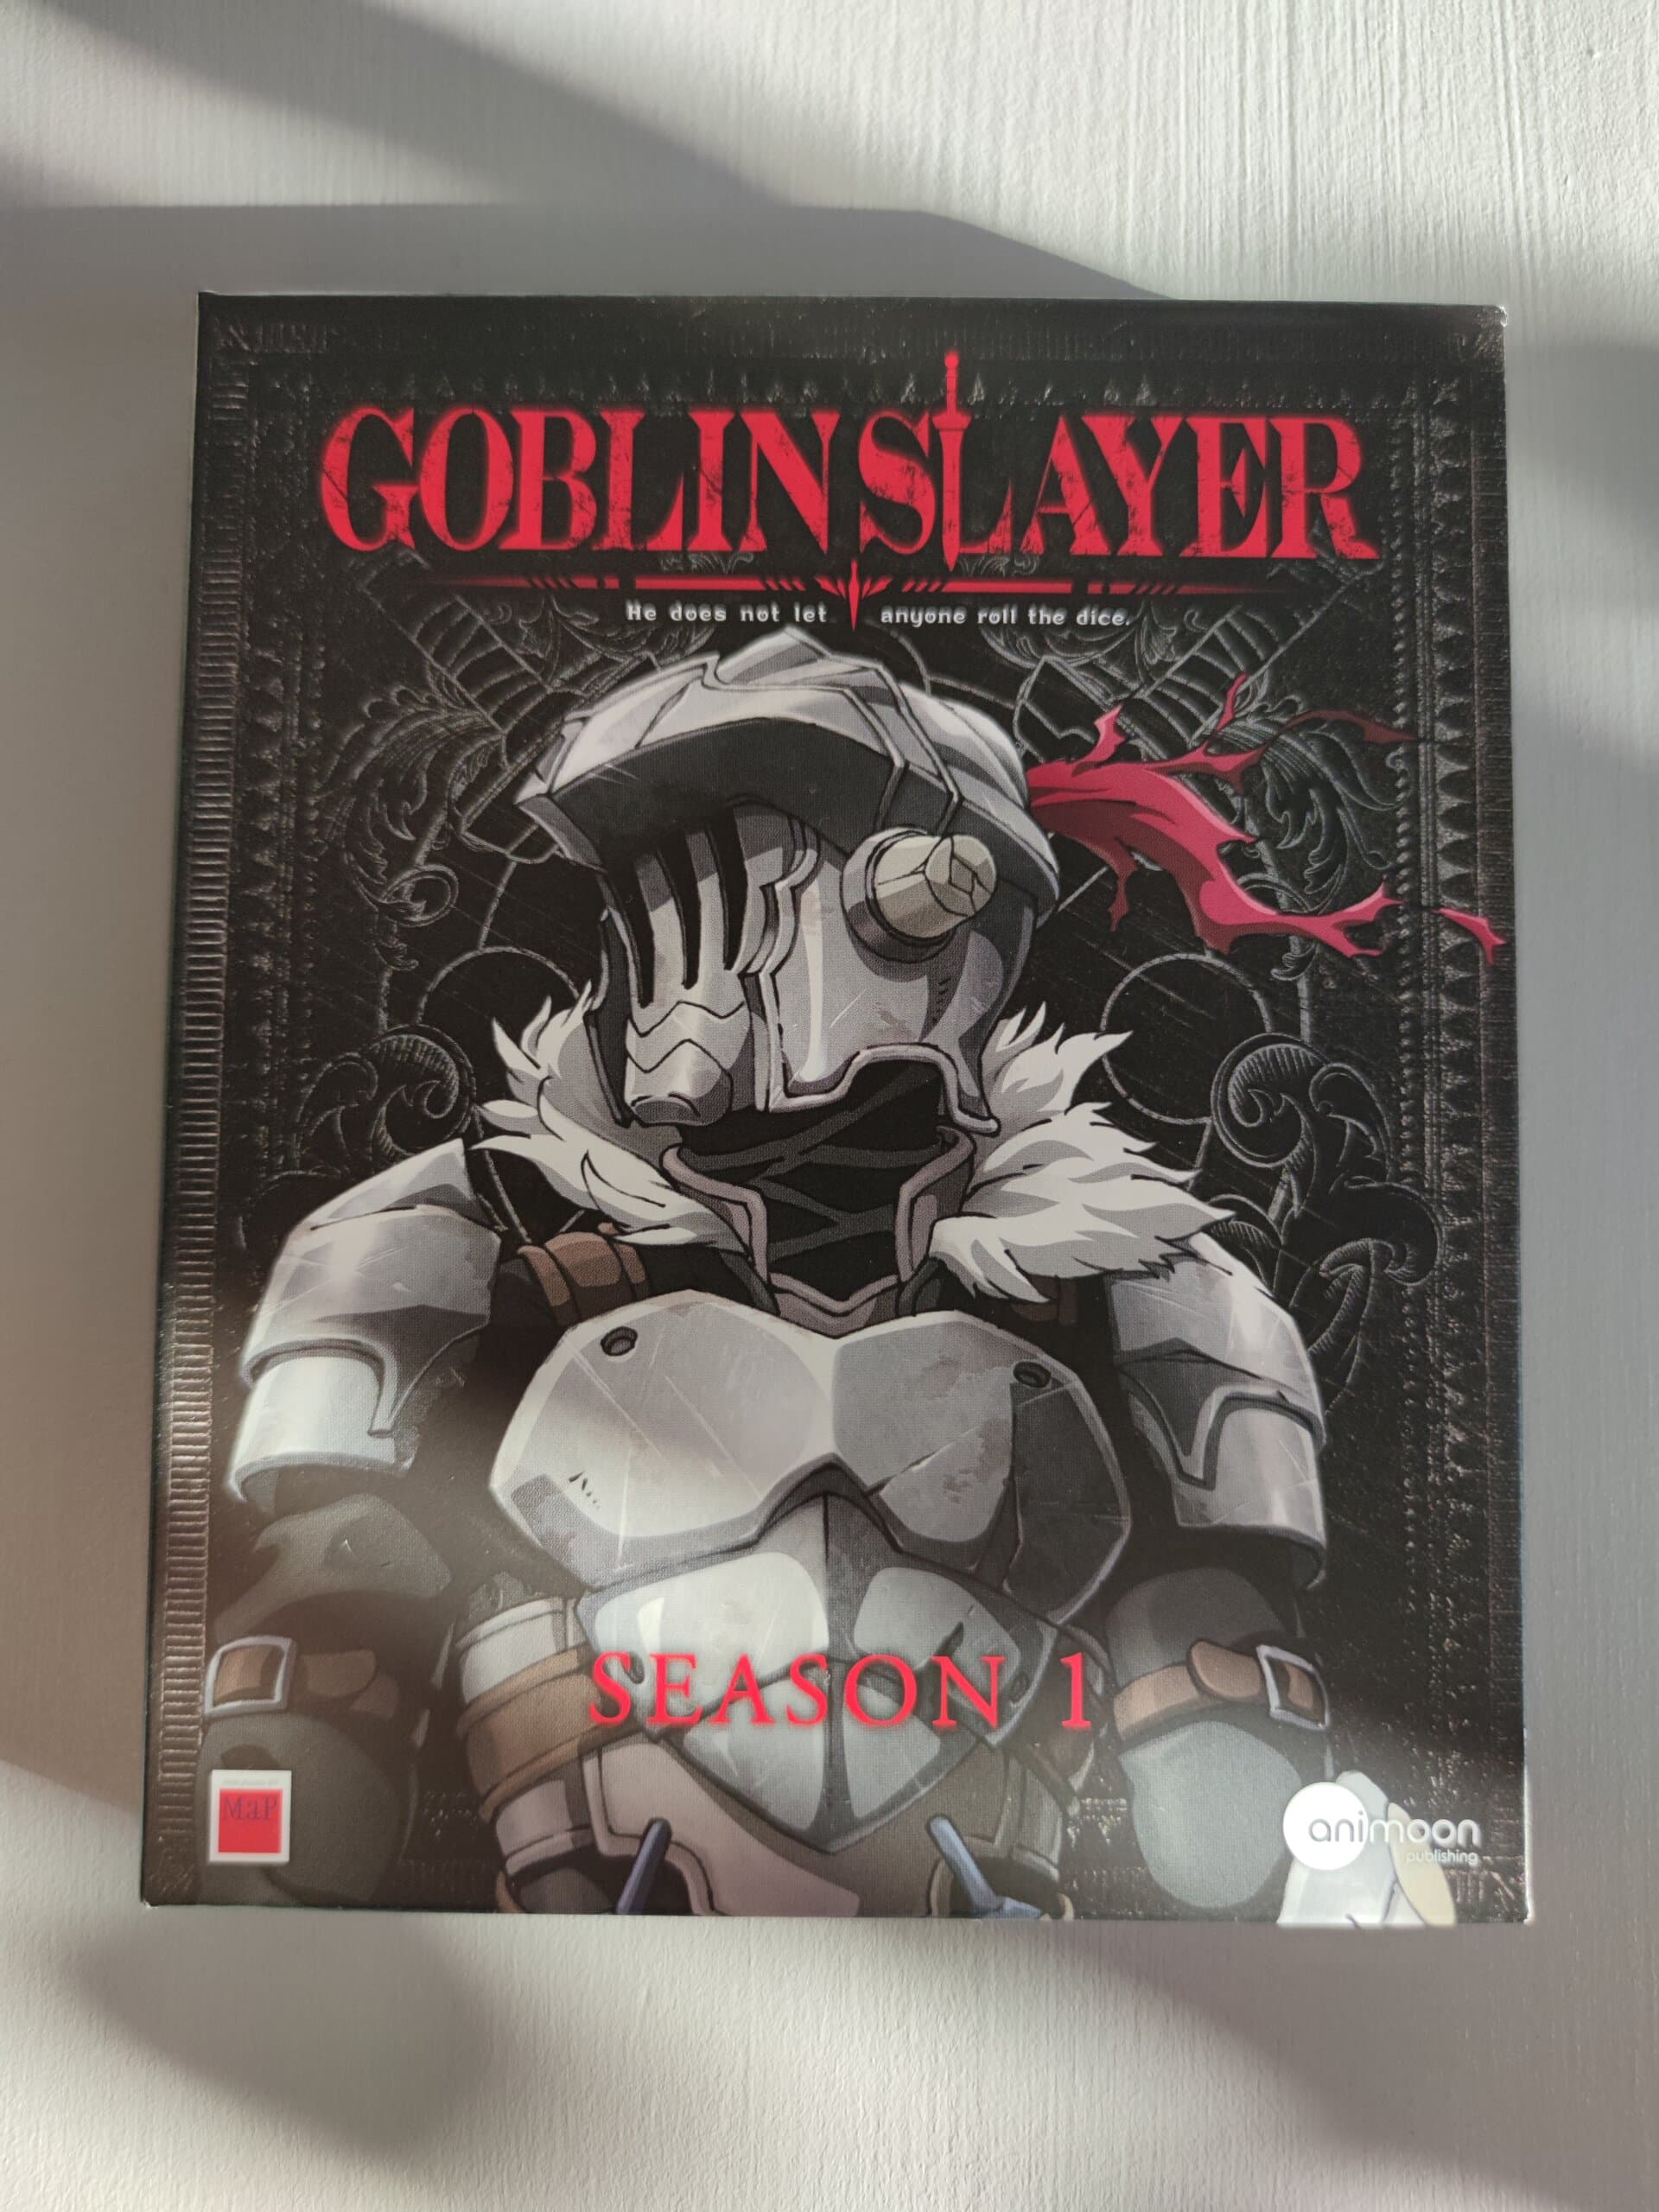 [Review] Goblin Slayer Season 1 Digipak (Blu-ray)